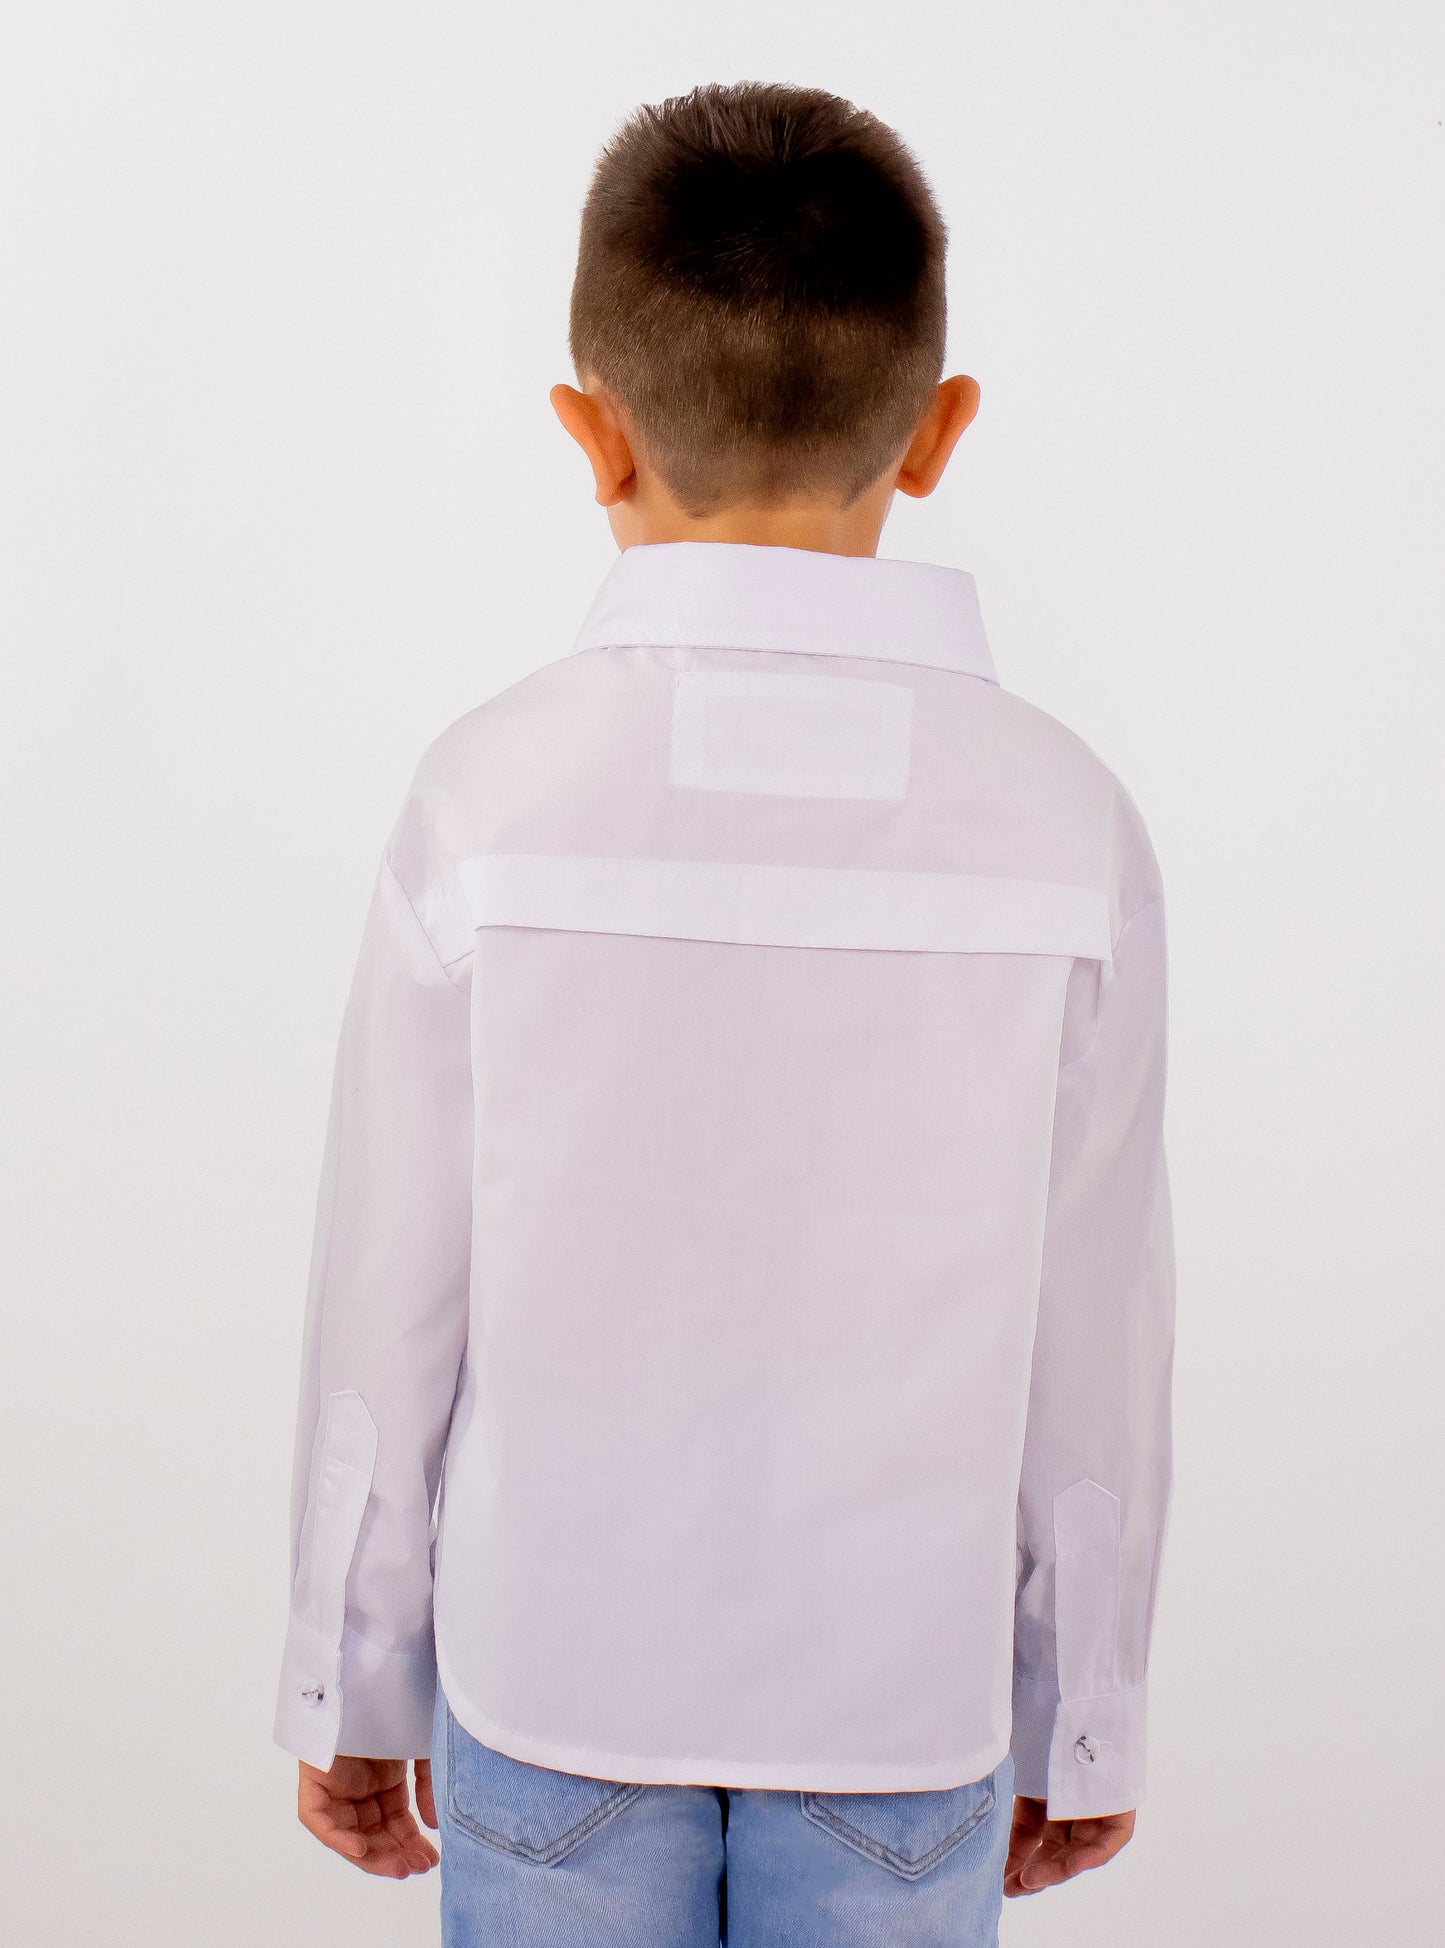 Camisa manga larga de color blanco